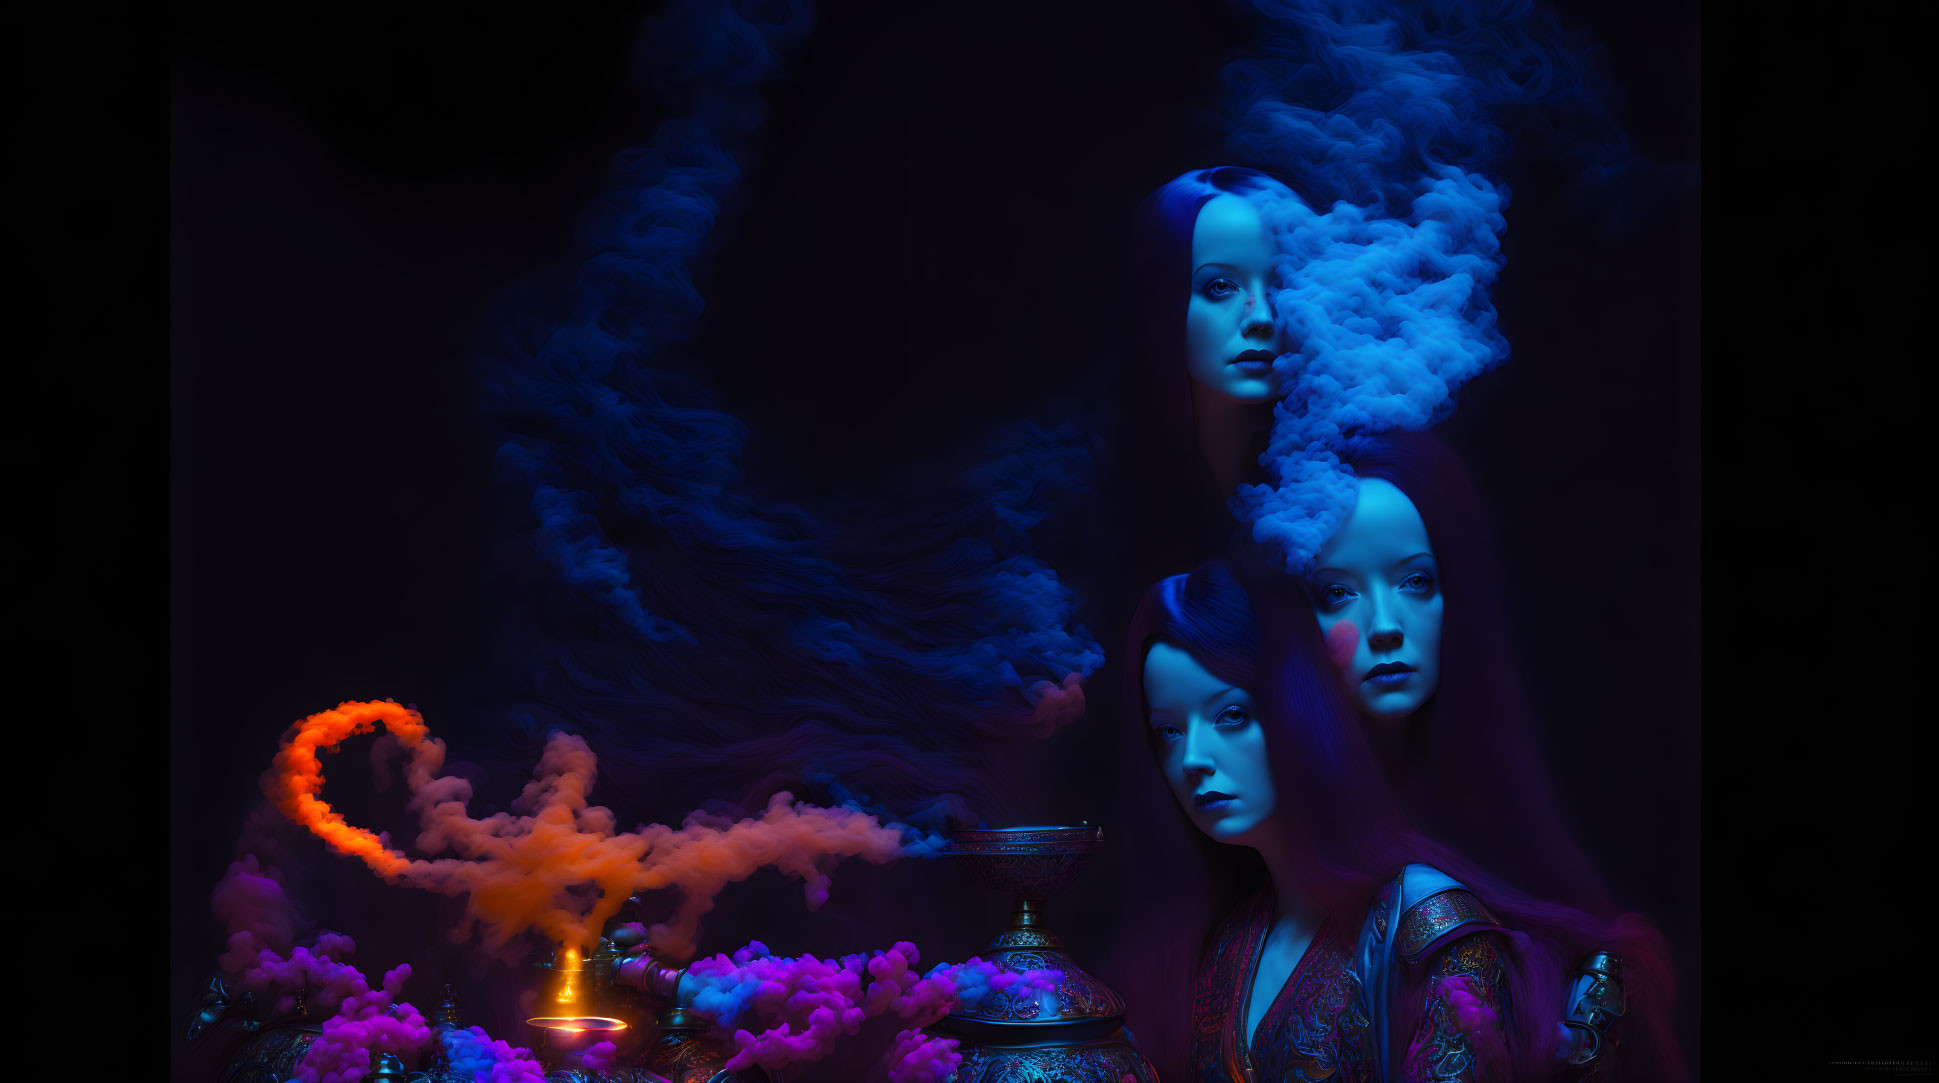 Three women in vibrant smoke with intricate attire patterns on dark background